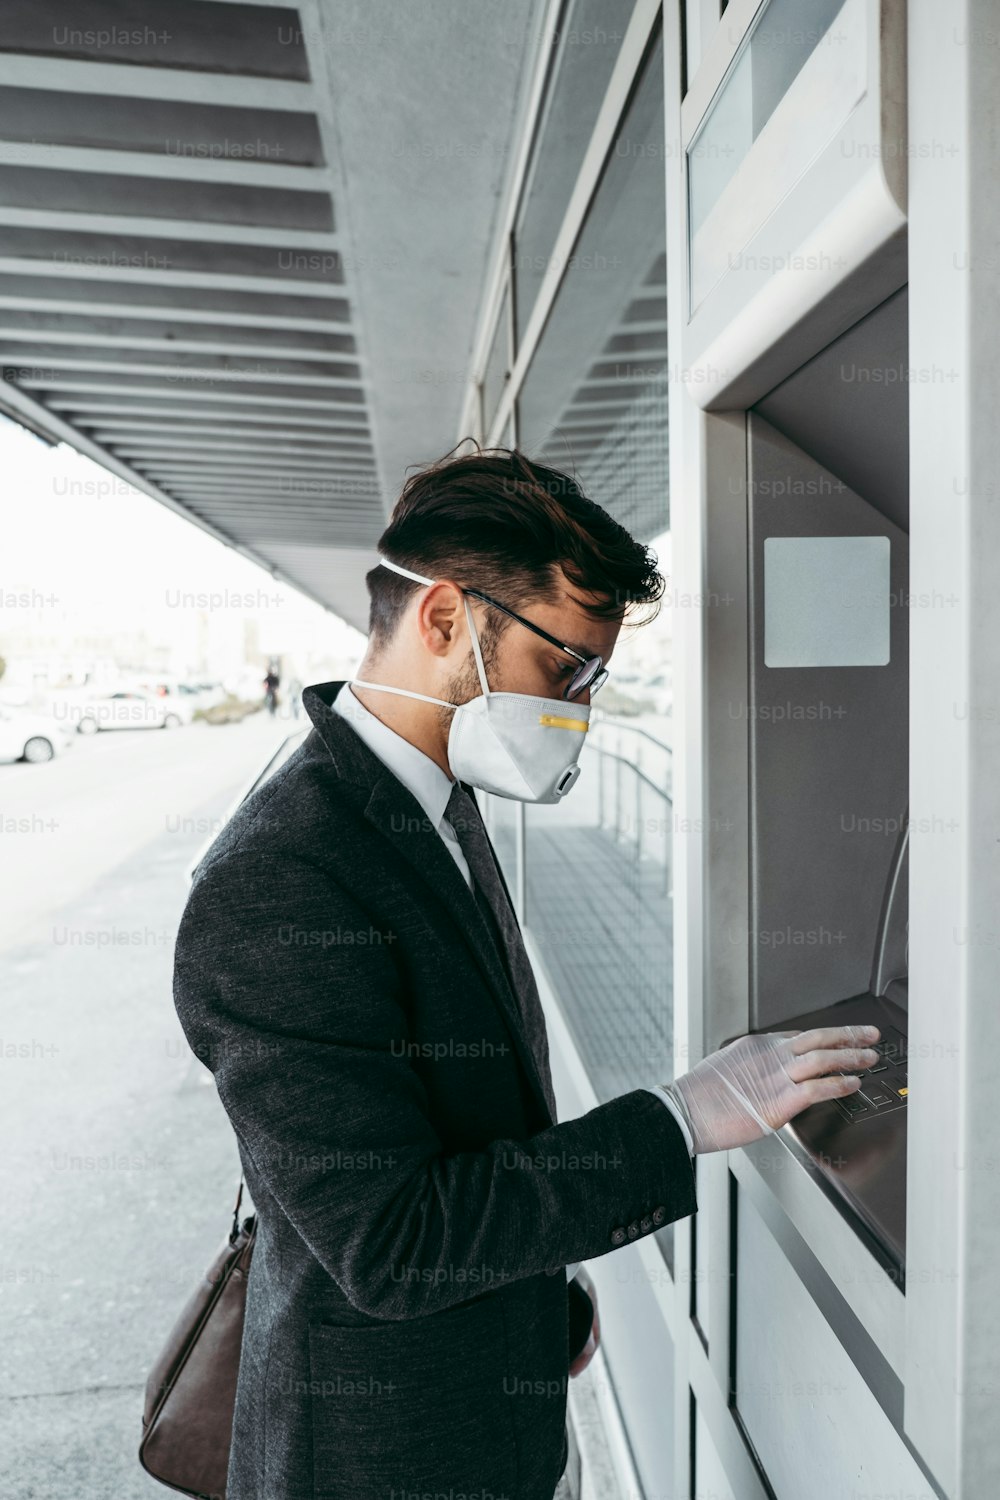 Hombre de negocios con máscara facial protectora y guantes usando cajero automático de la calle. Concepto de pandemia o epidemia de virus.